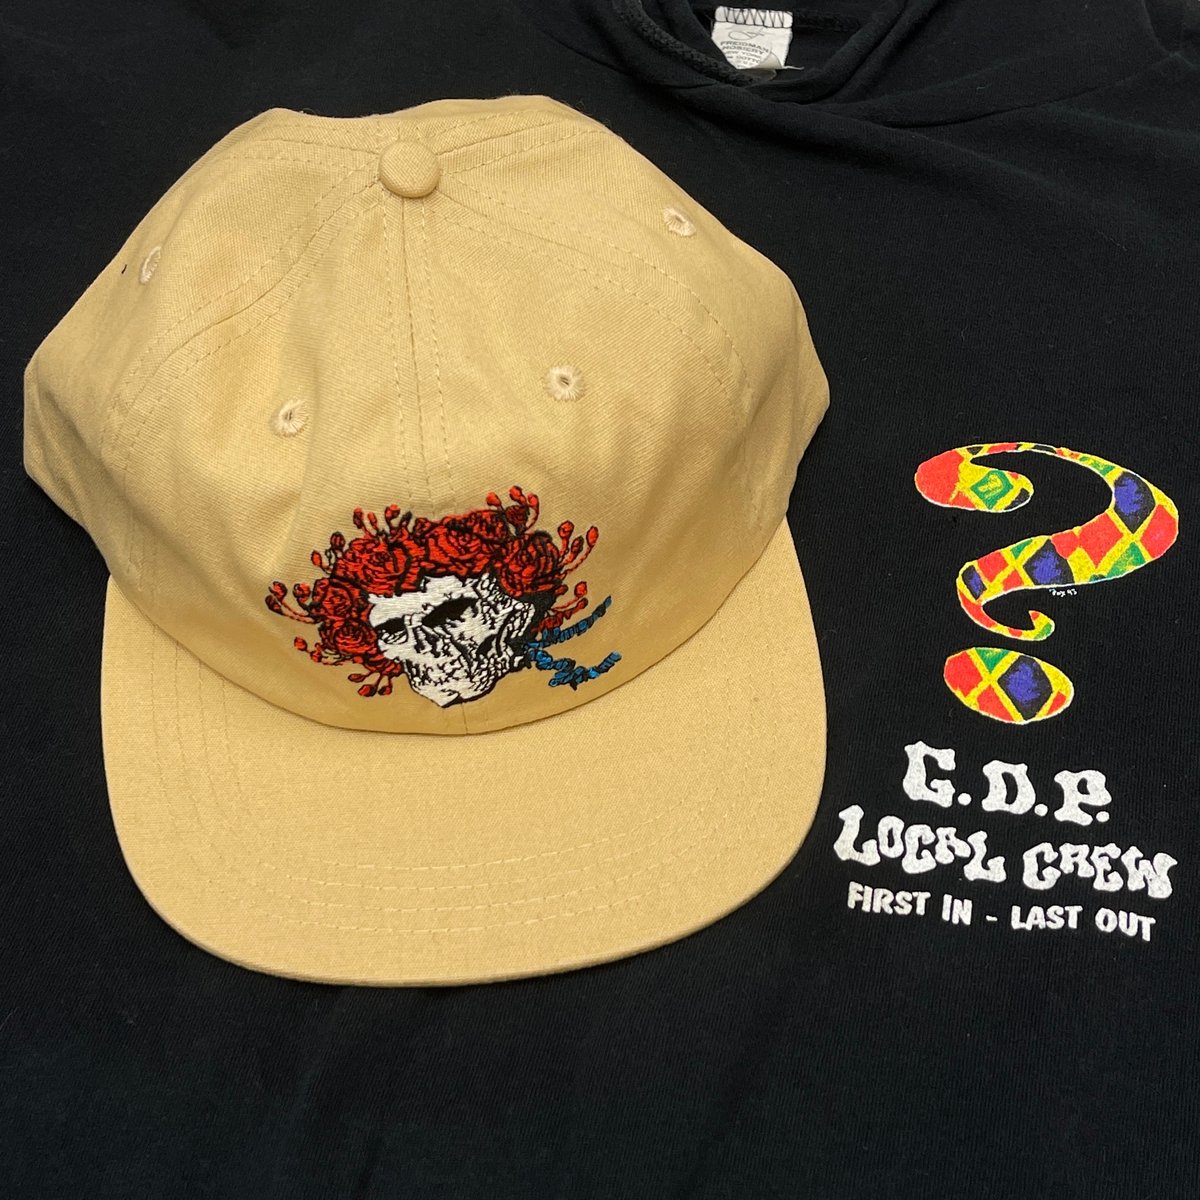 🔥FOR SALE!!🔥Original Vintage 90's Grateful Dead Road Crew Hoodie! - Ram Rod Collection!! - XL